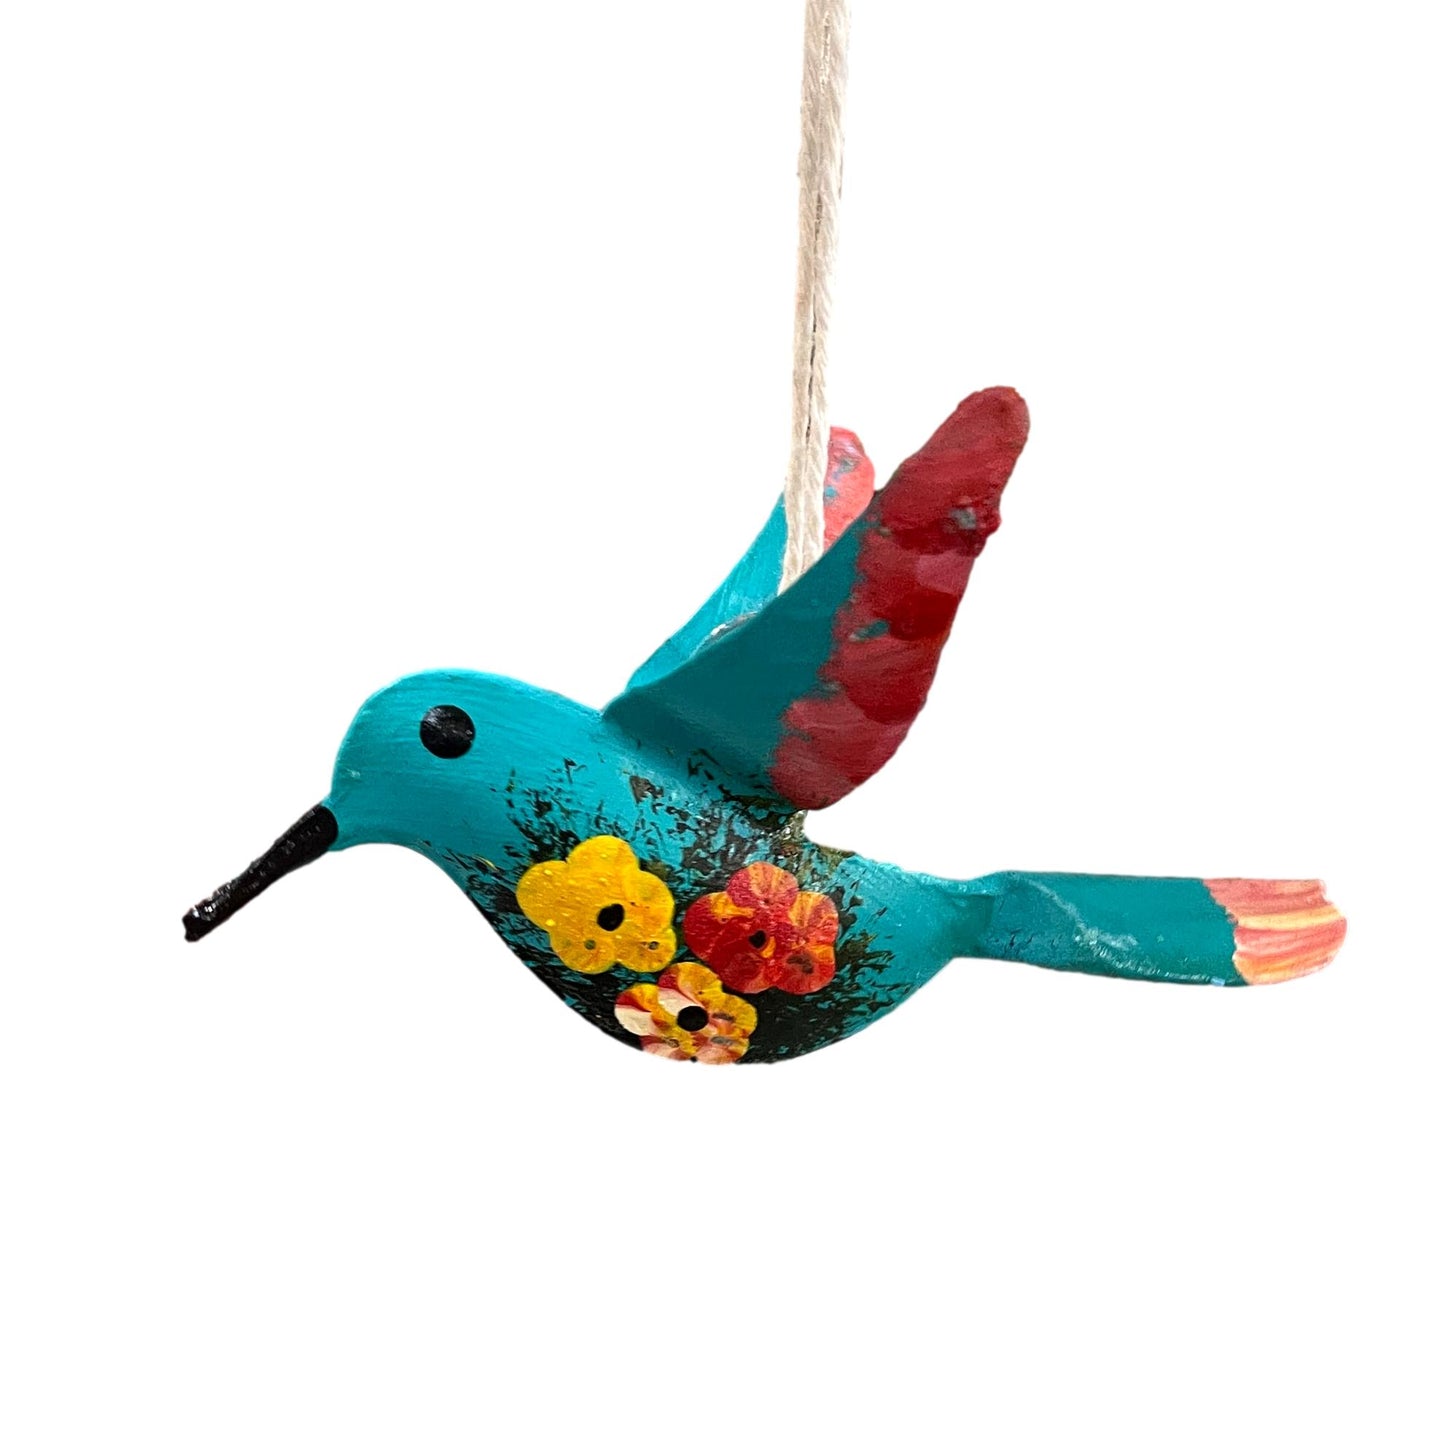 Humming Bird Ornaments